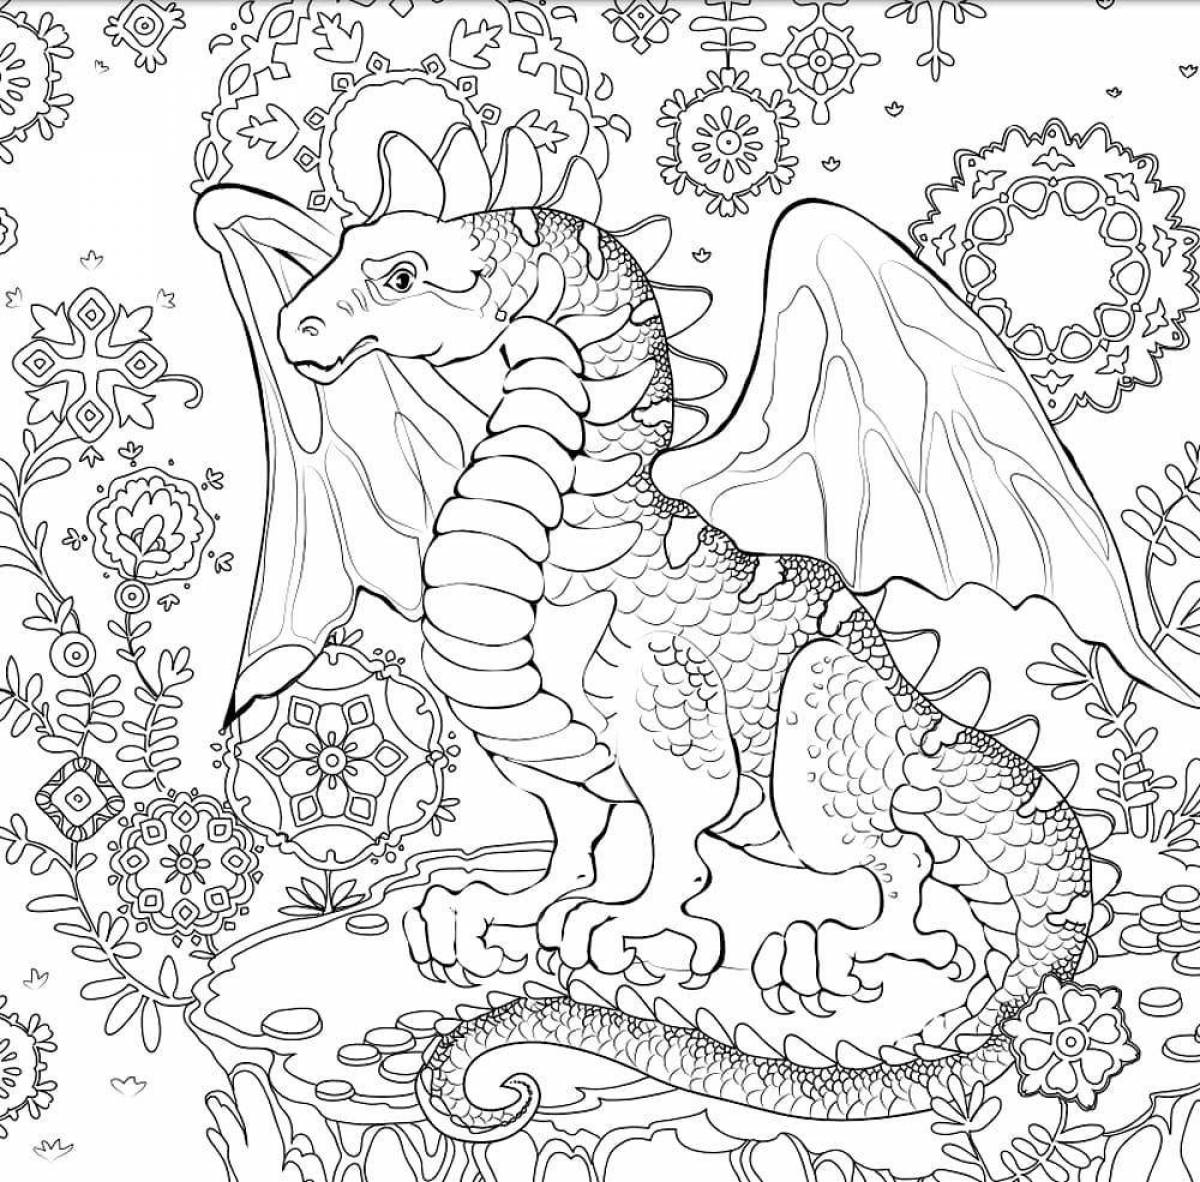 Charming anti-stress dragon coloring book